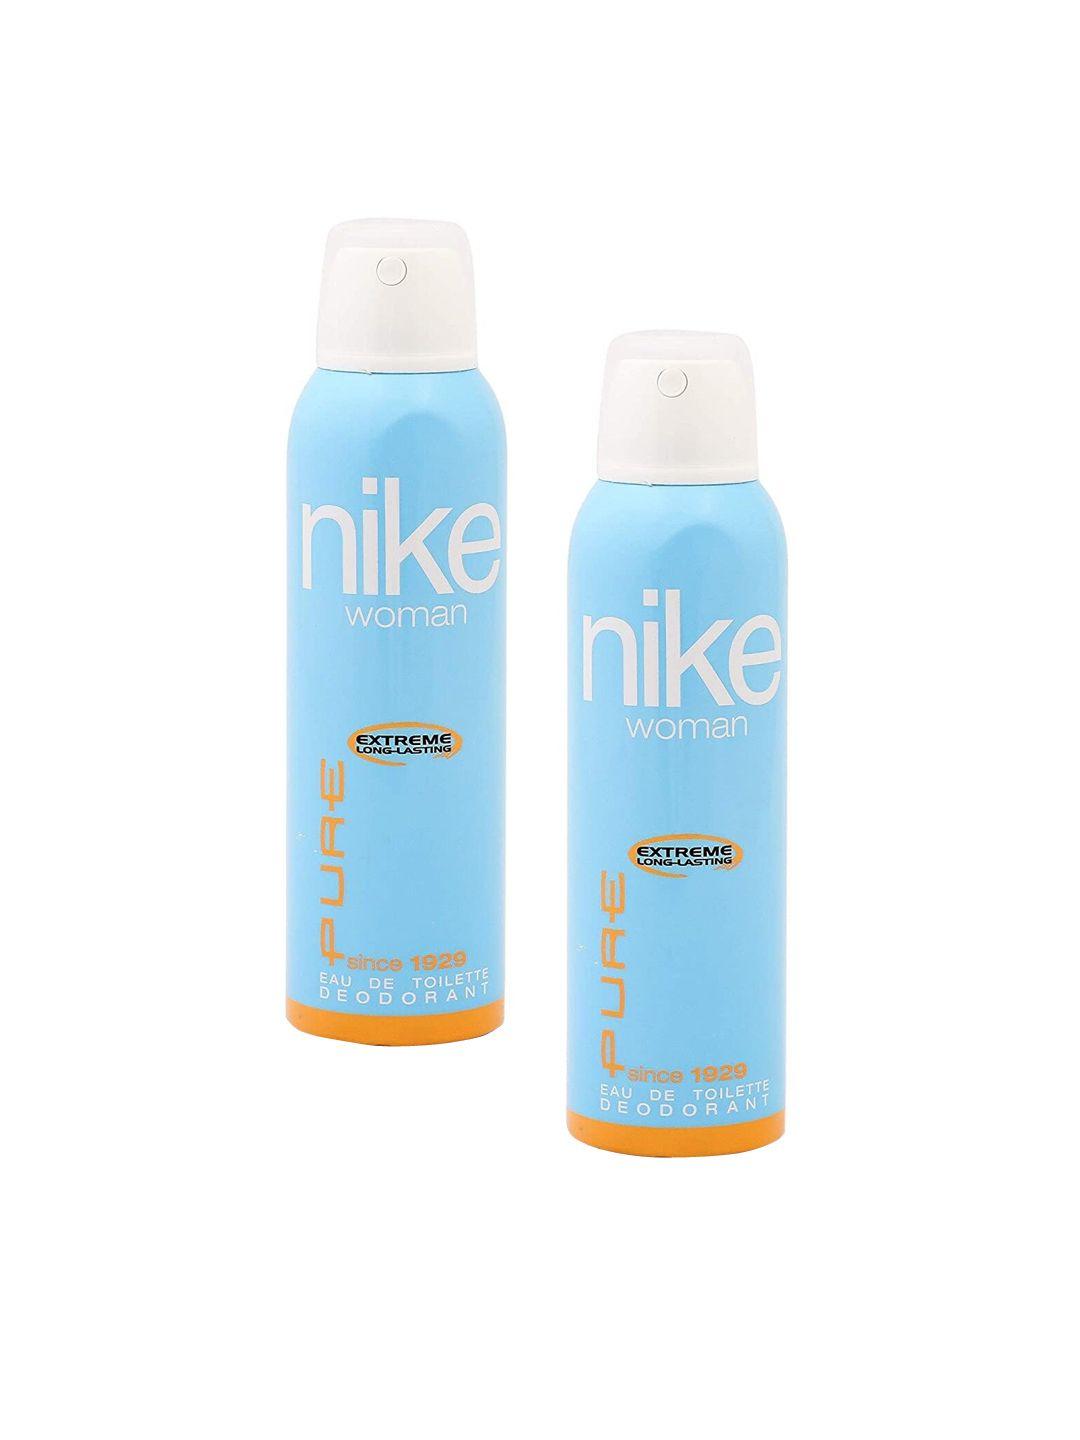 nike-pack-of-2-woman-pure-deodorant--200ml-each